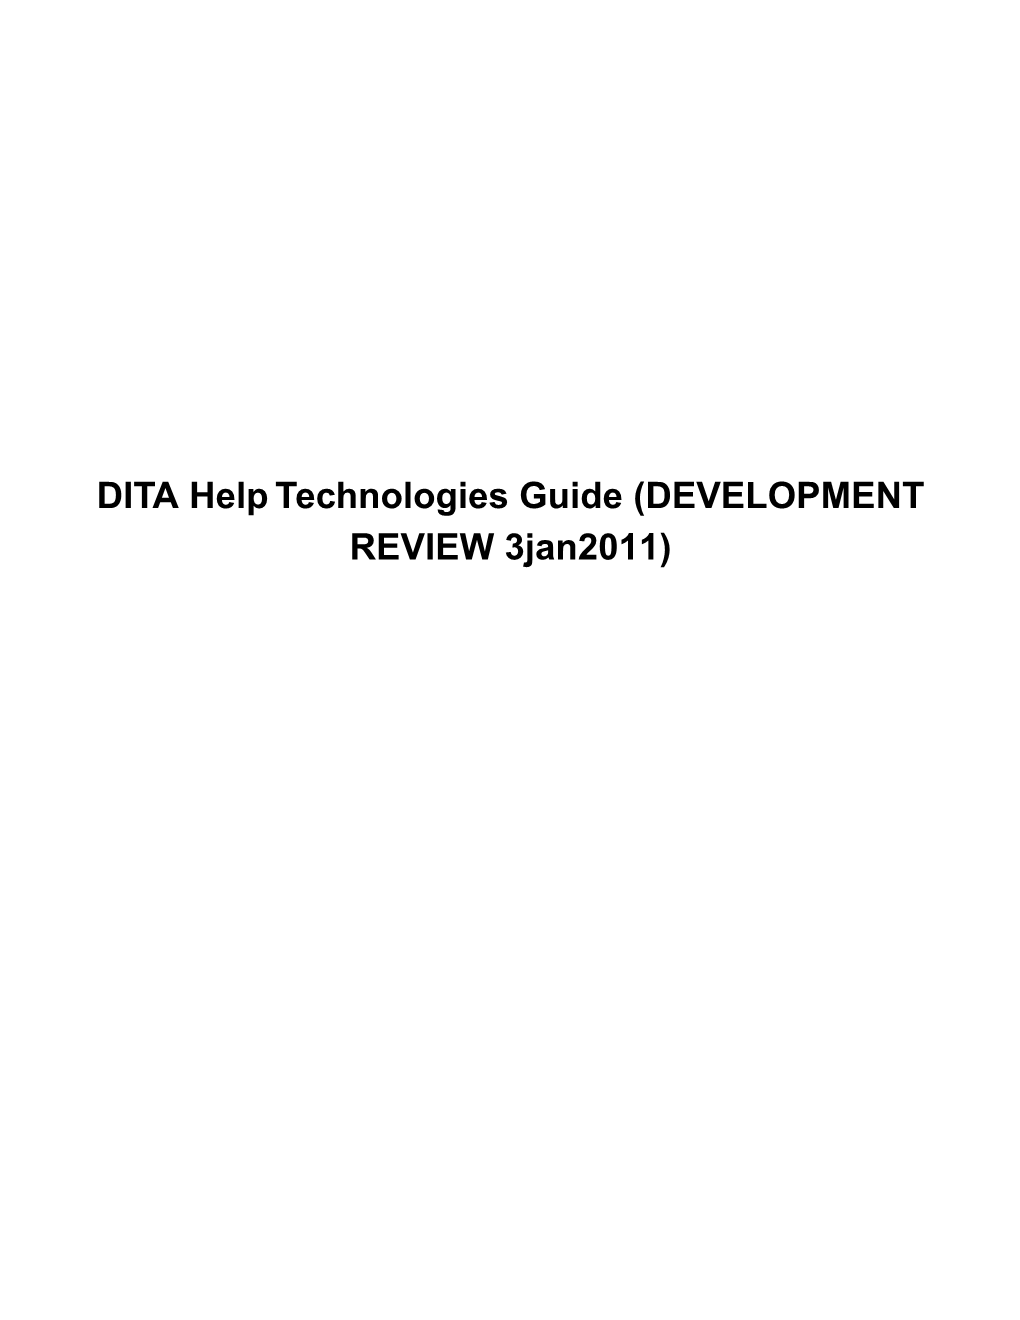 DITA Help Technologies Guide (DEVELOPMENT REVIEW 3Jan2011) | TOC | 2